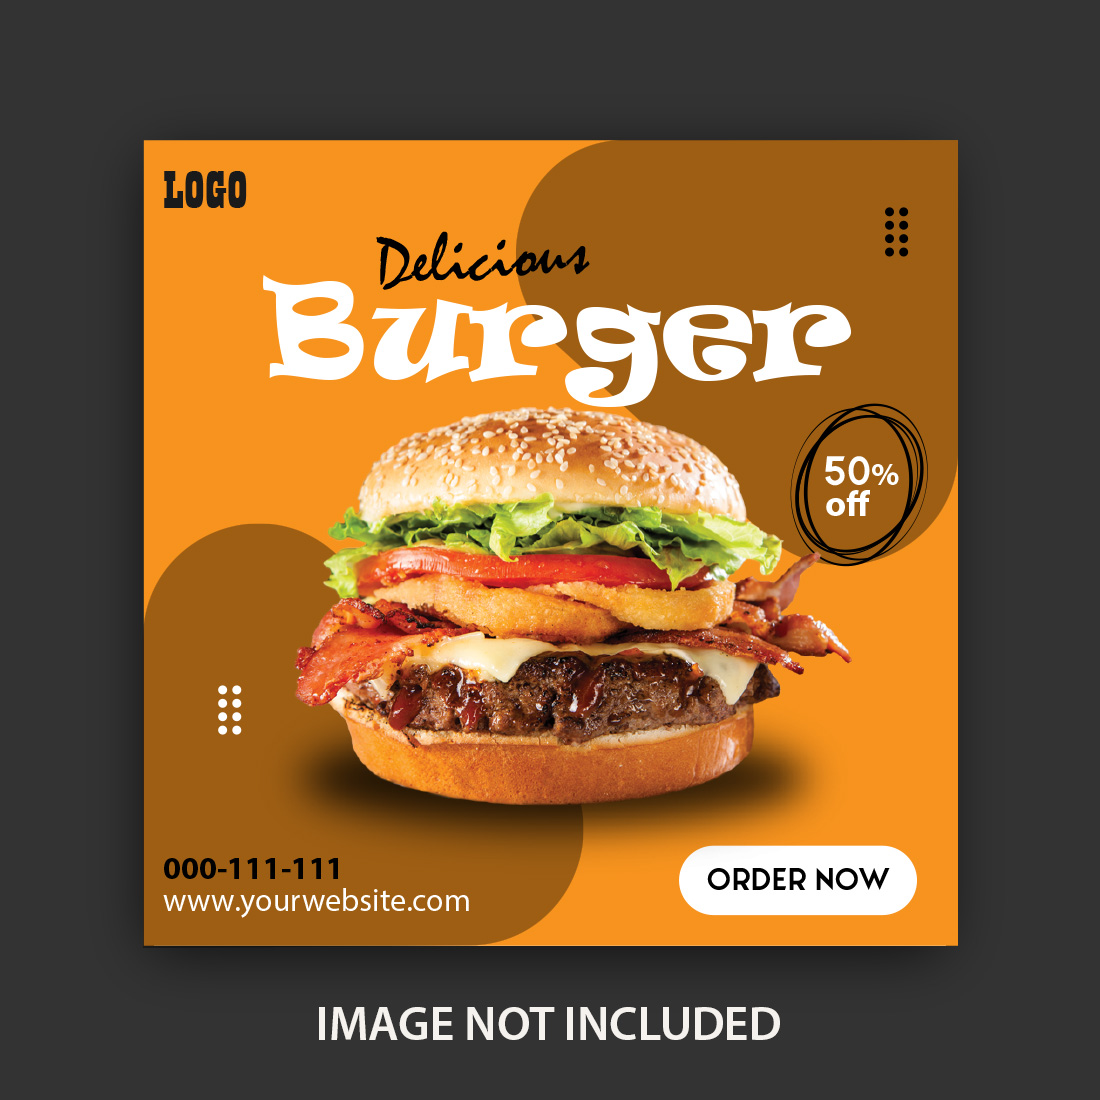 Delicious burger and food menu social media banner design.